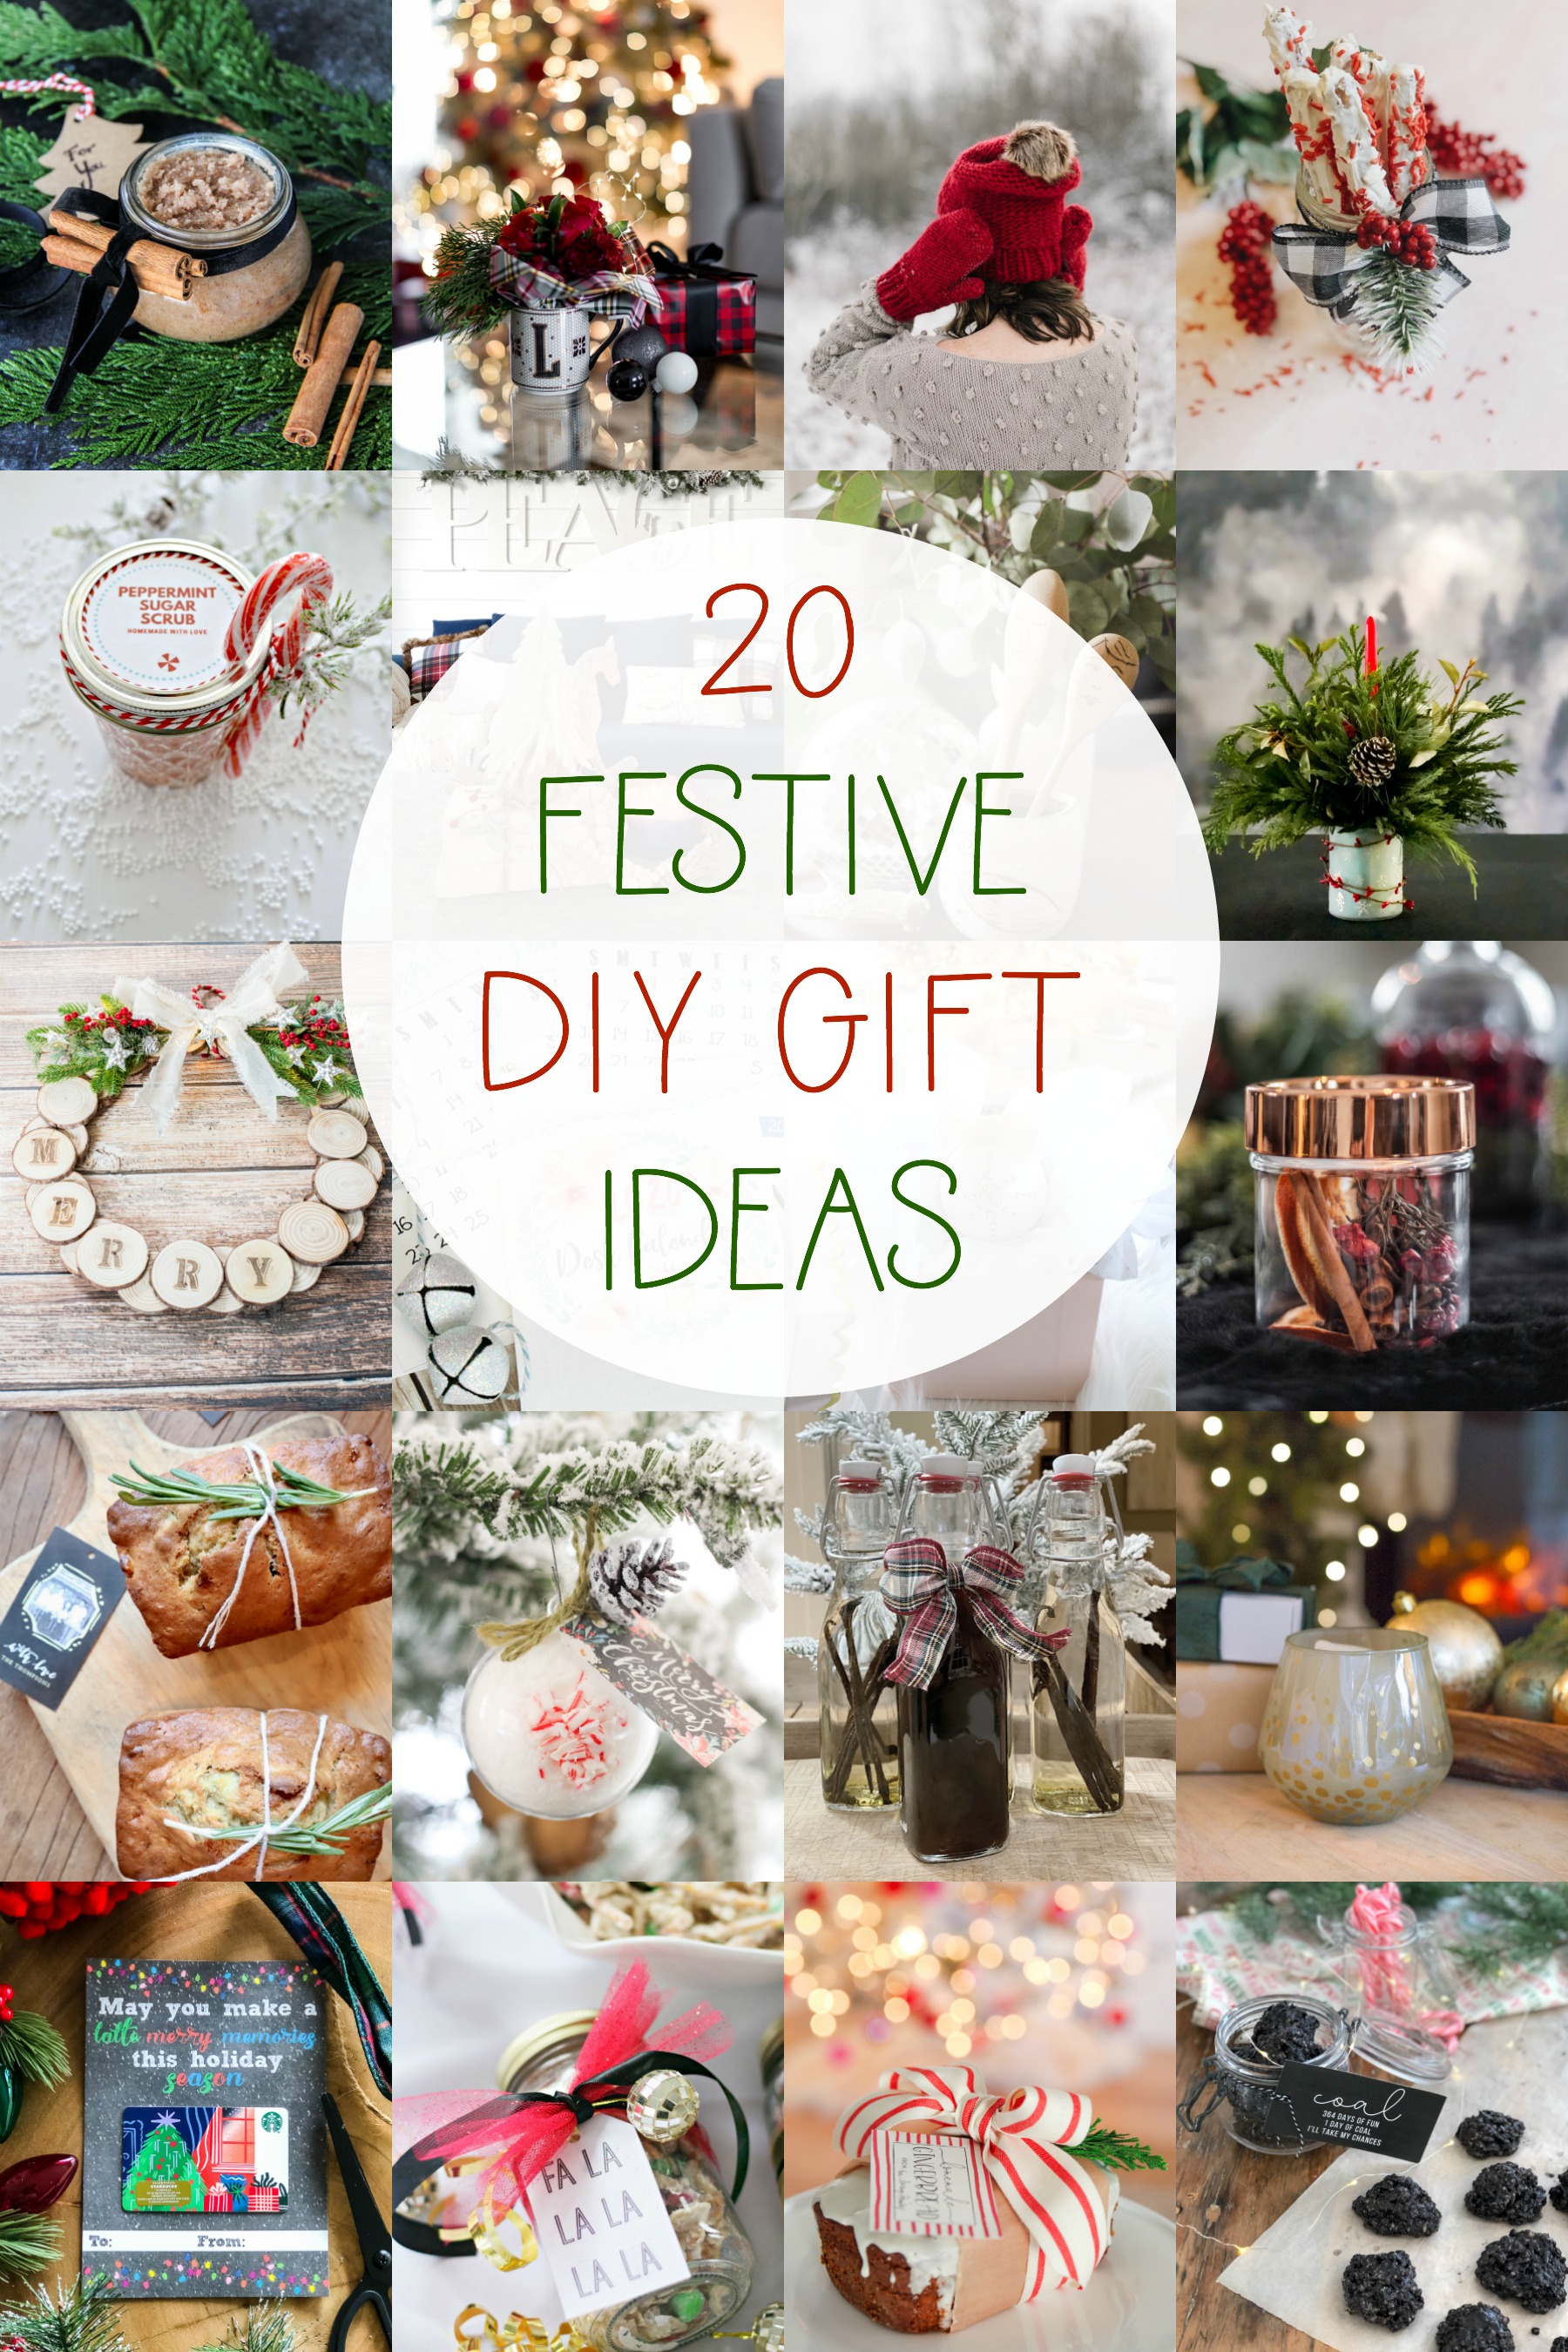 20 Festive DIY Gift Ideas Poster.